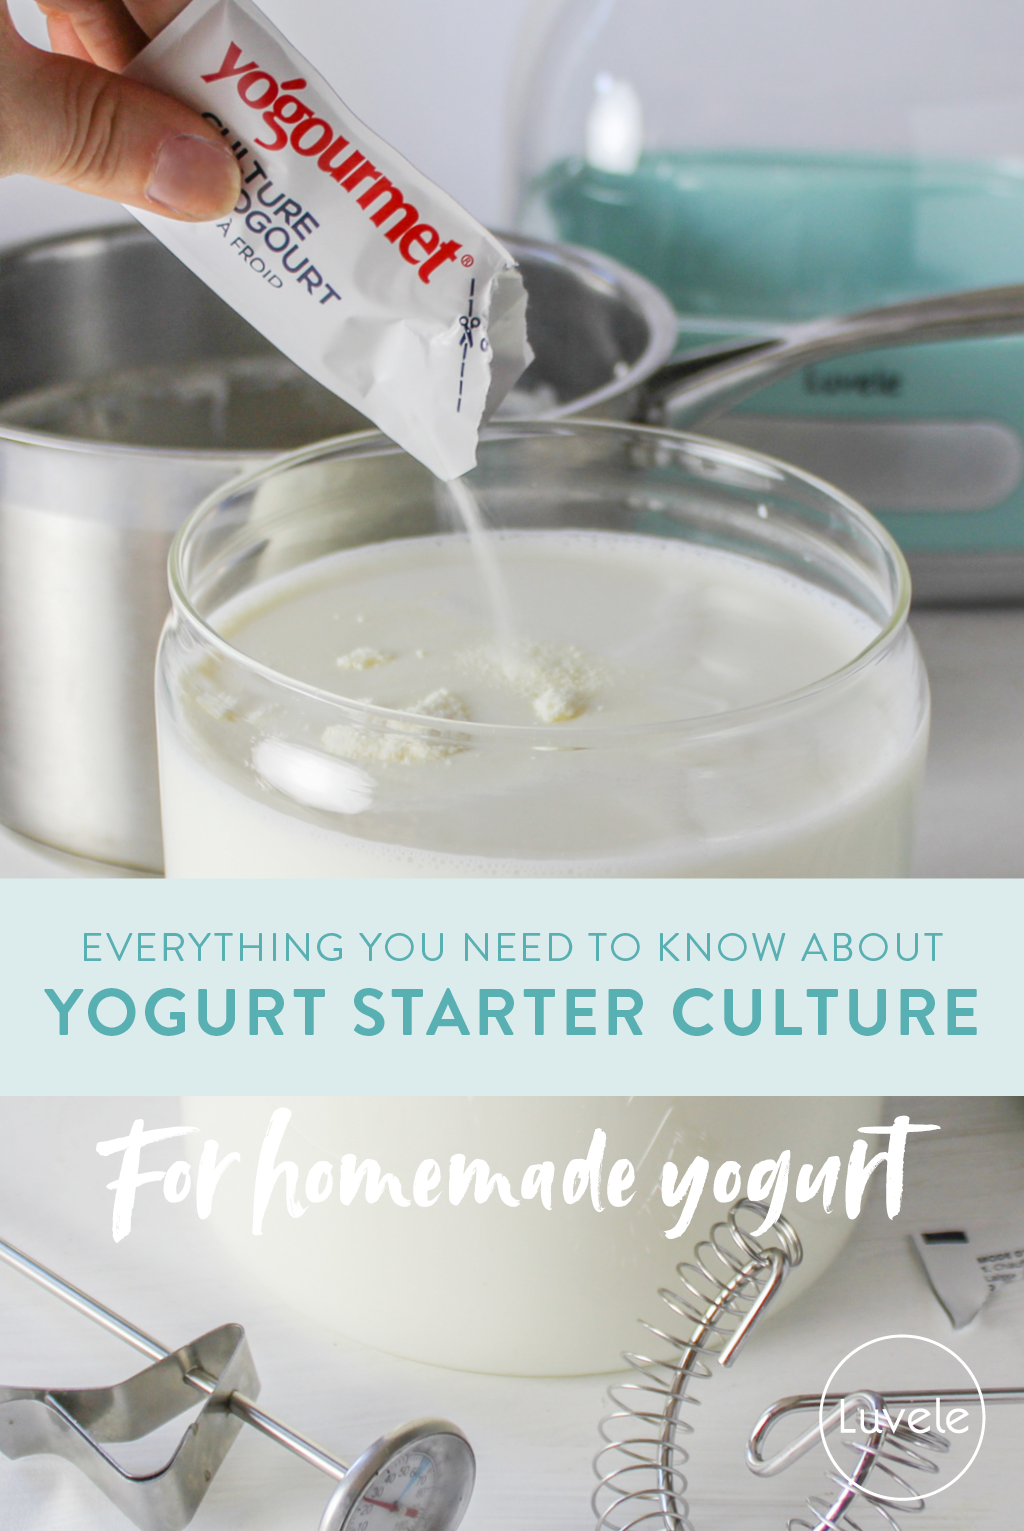 Yogurt starter culture info